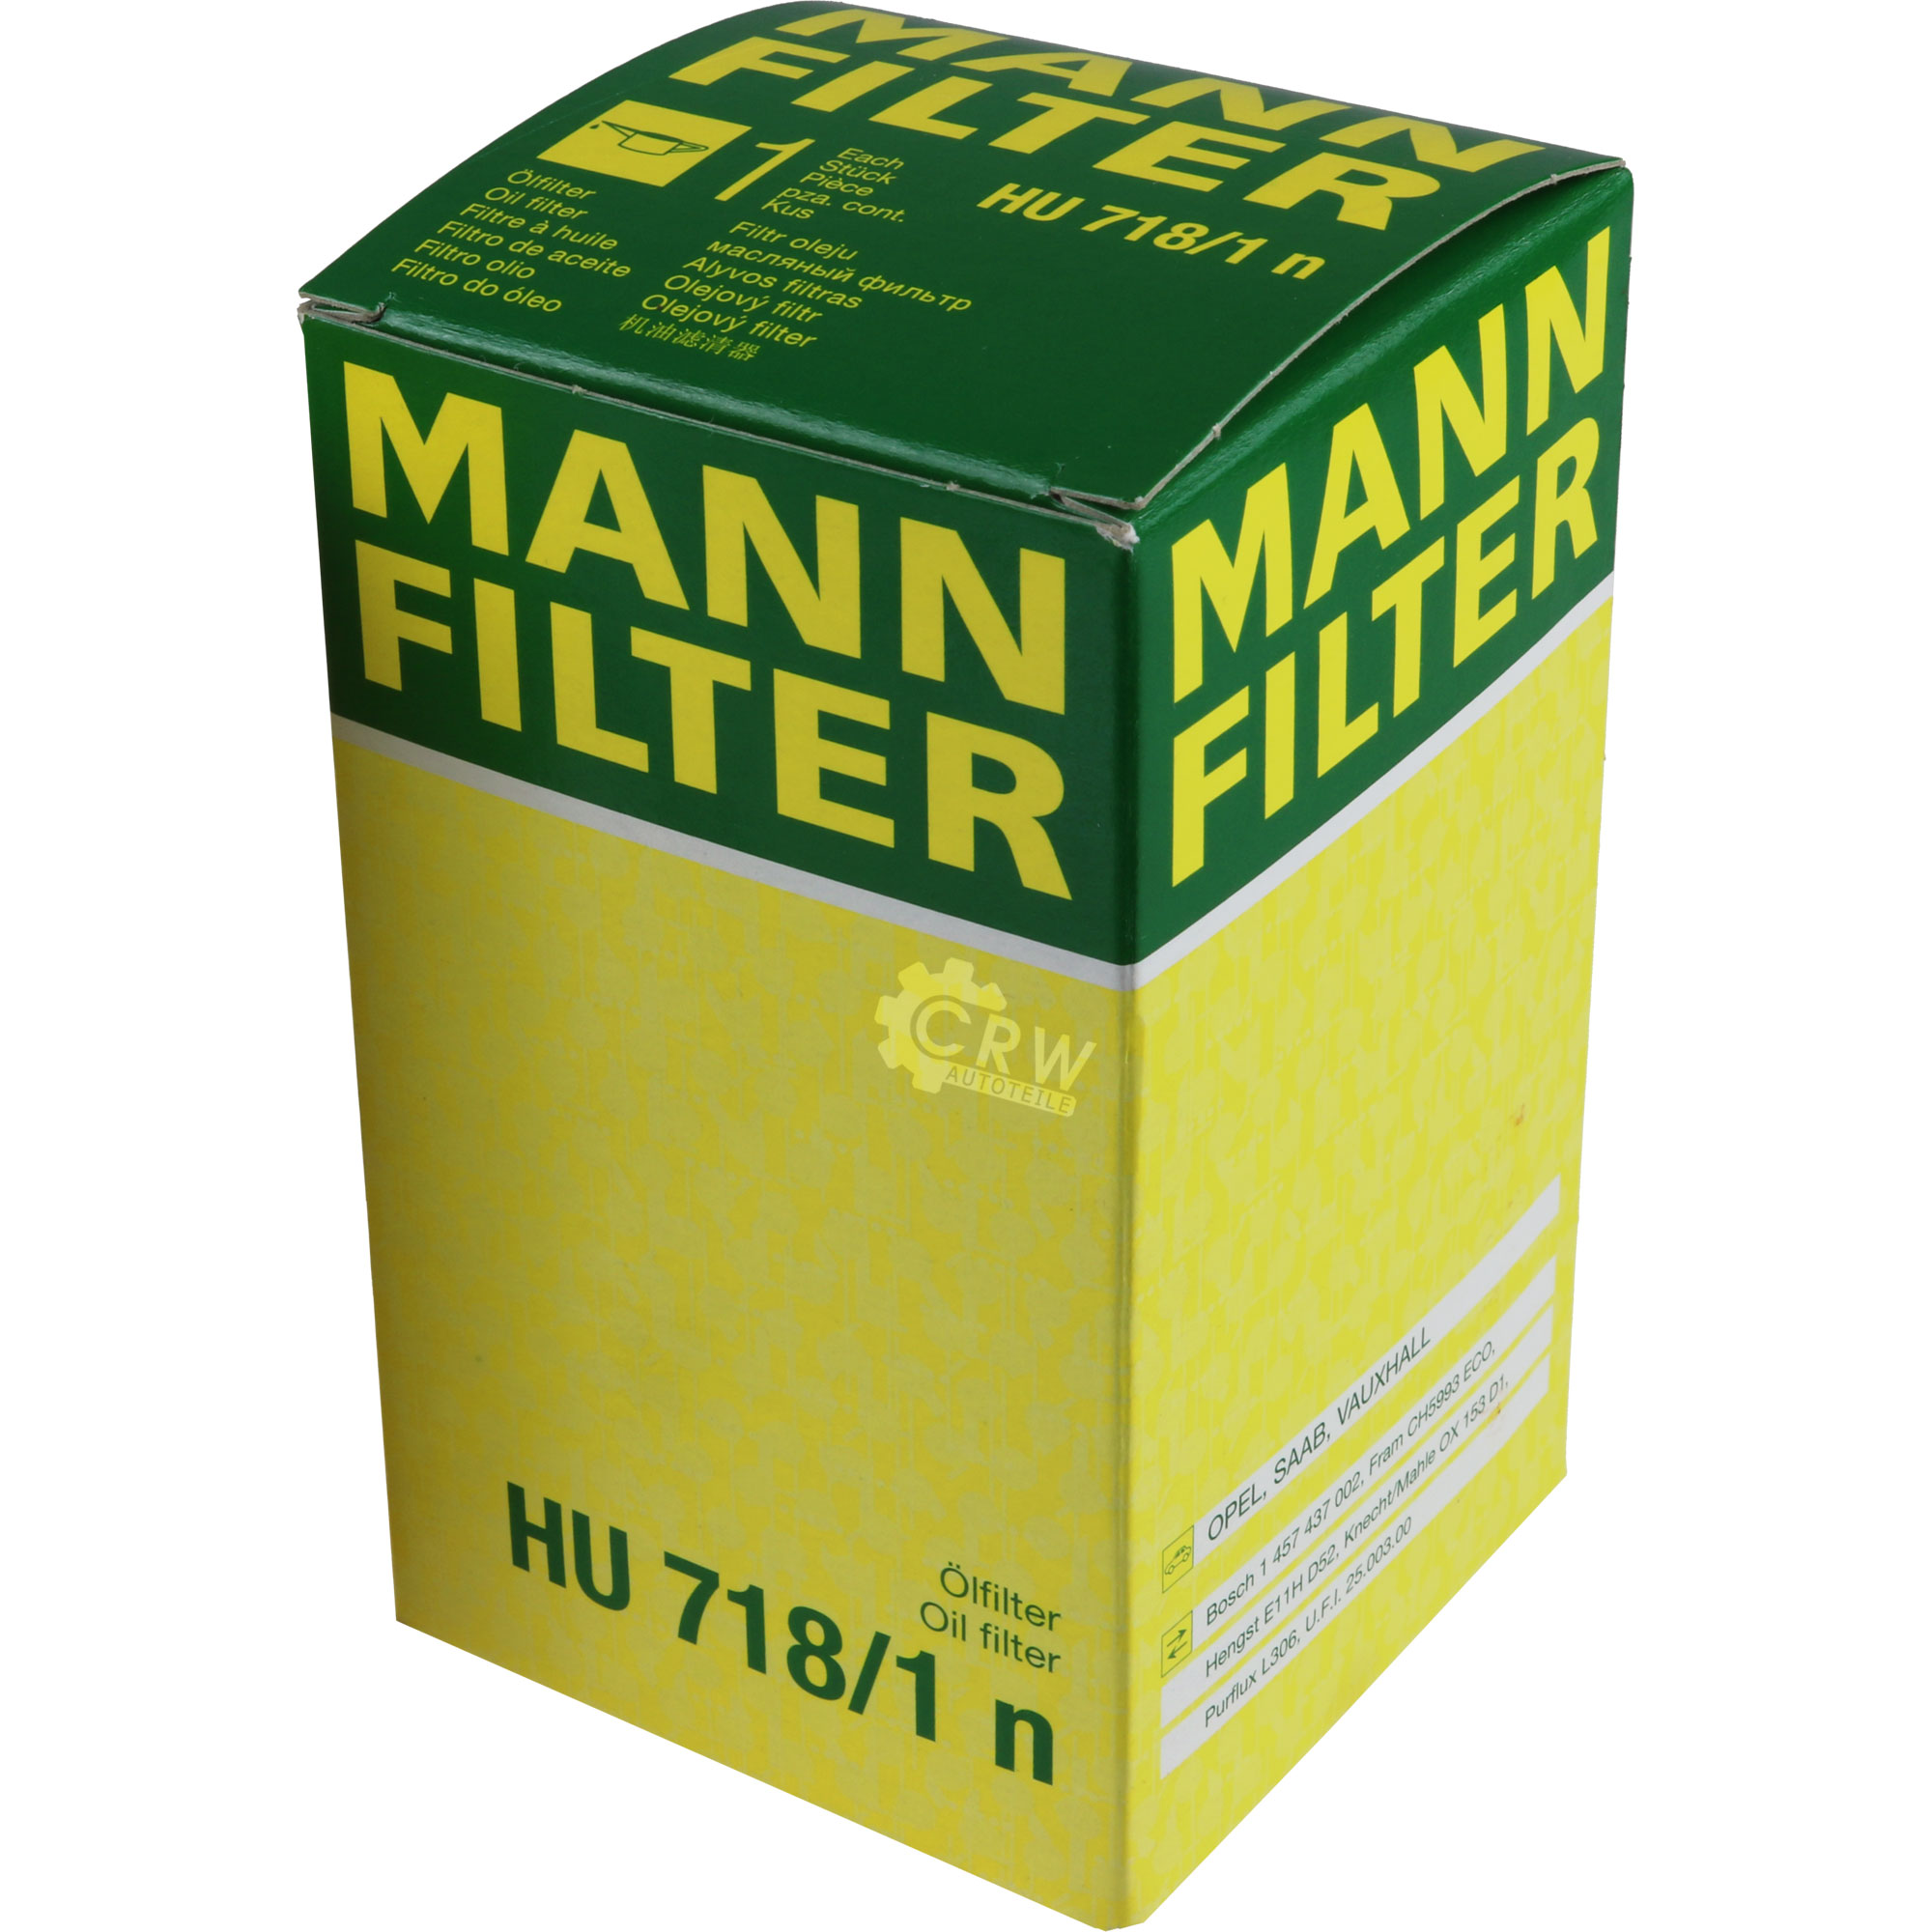 MANN-FILTER Ölfilter HU 718/1 n Oil Filter